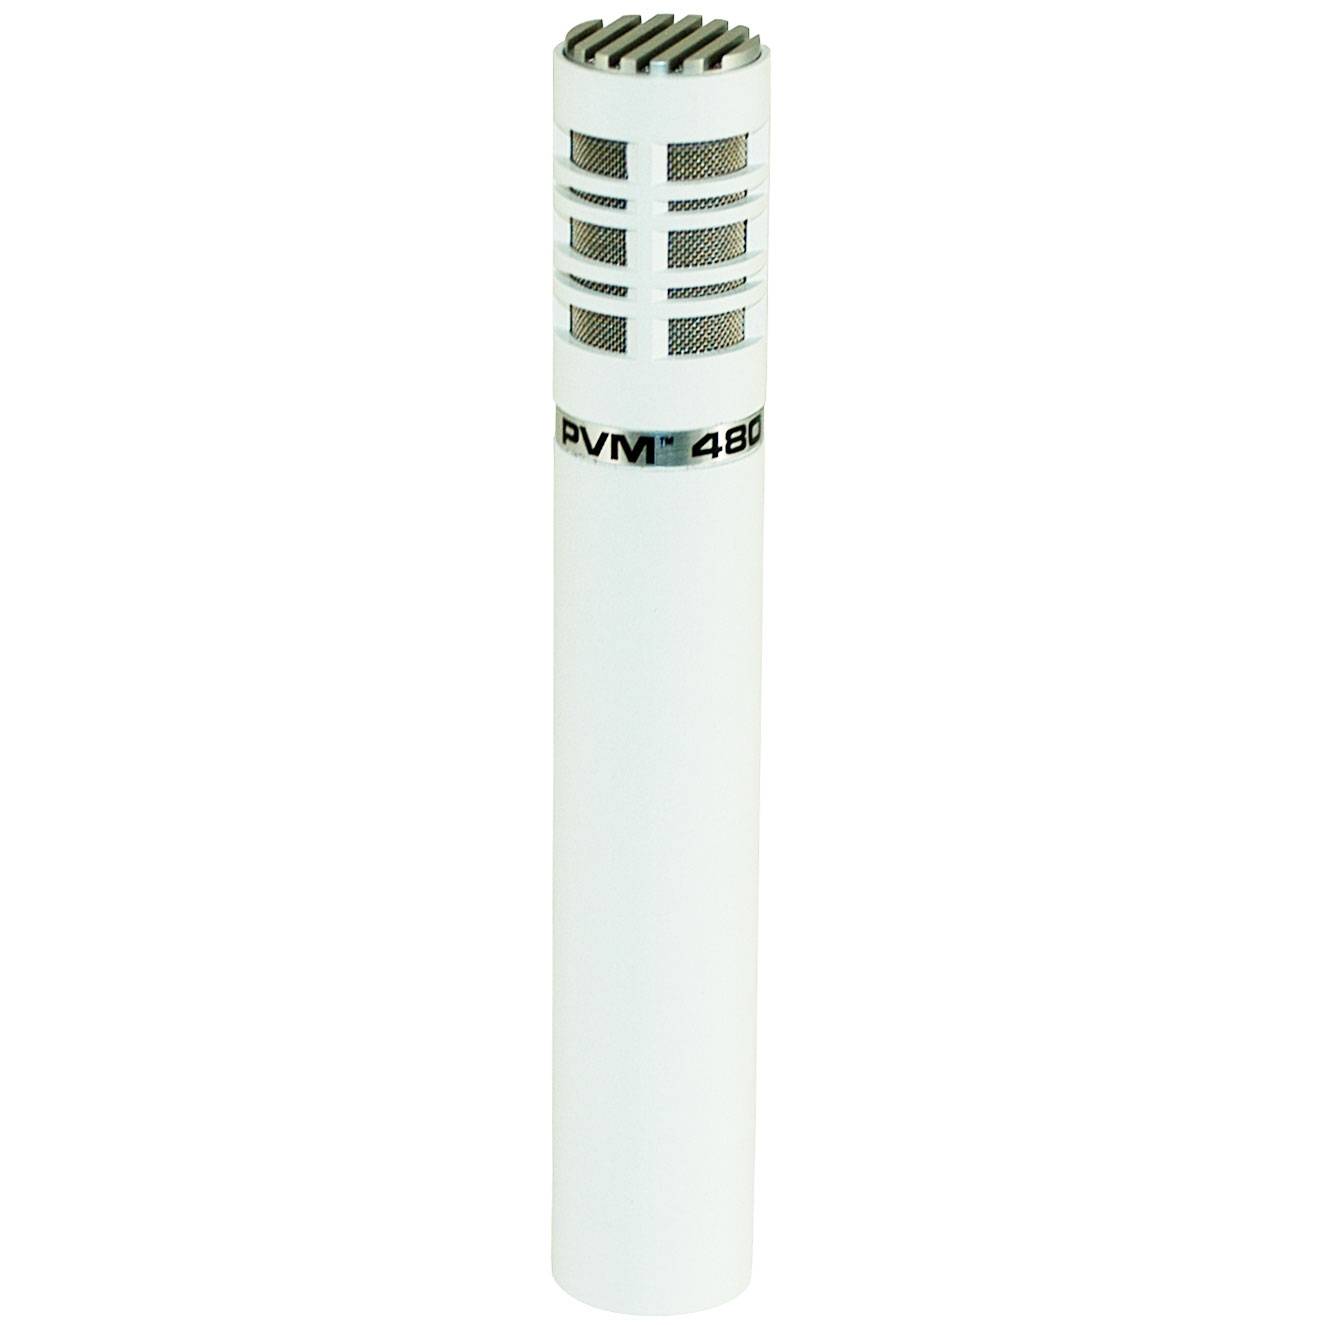 PEAVEY PVM 480 Hypercardioid White Condenser Microphone